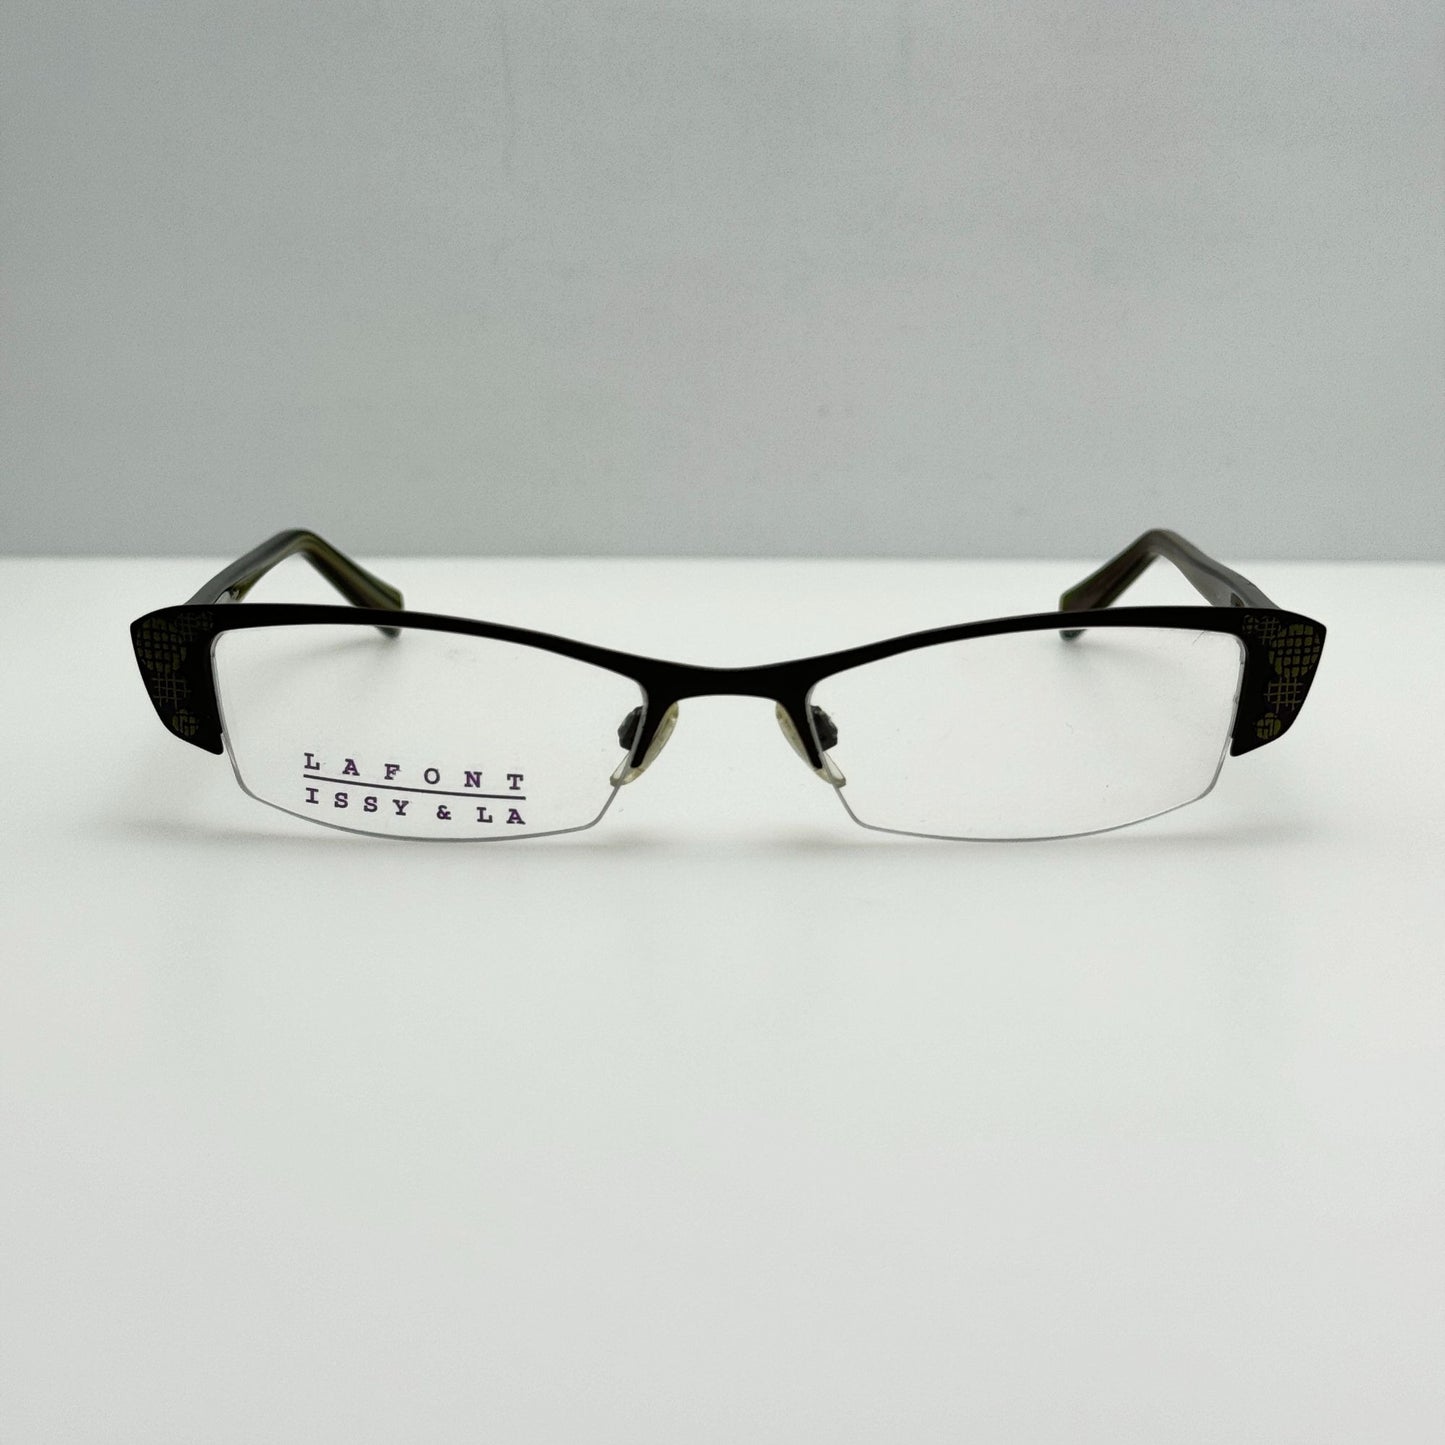 Jean Lafont Eyeglasses Eye Glasses Frames Canebiere 2 281 49-17-142